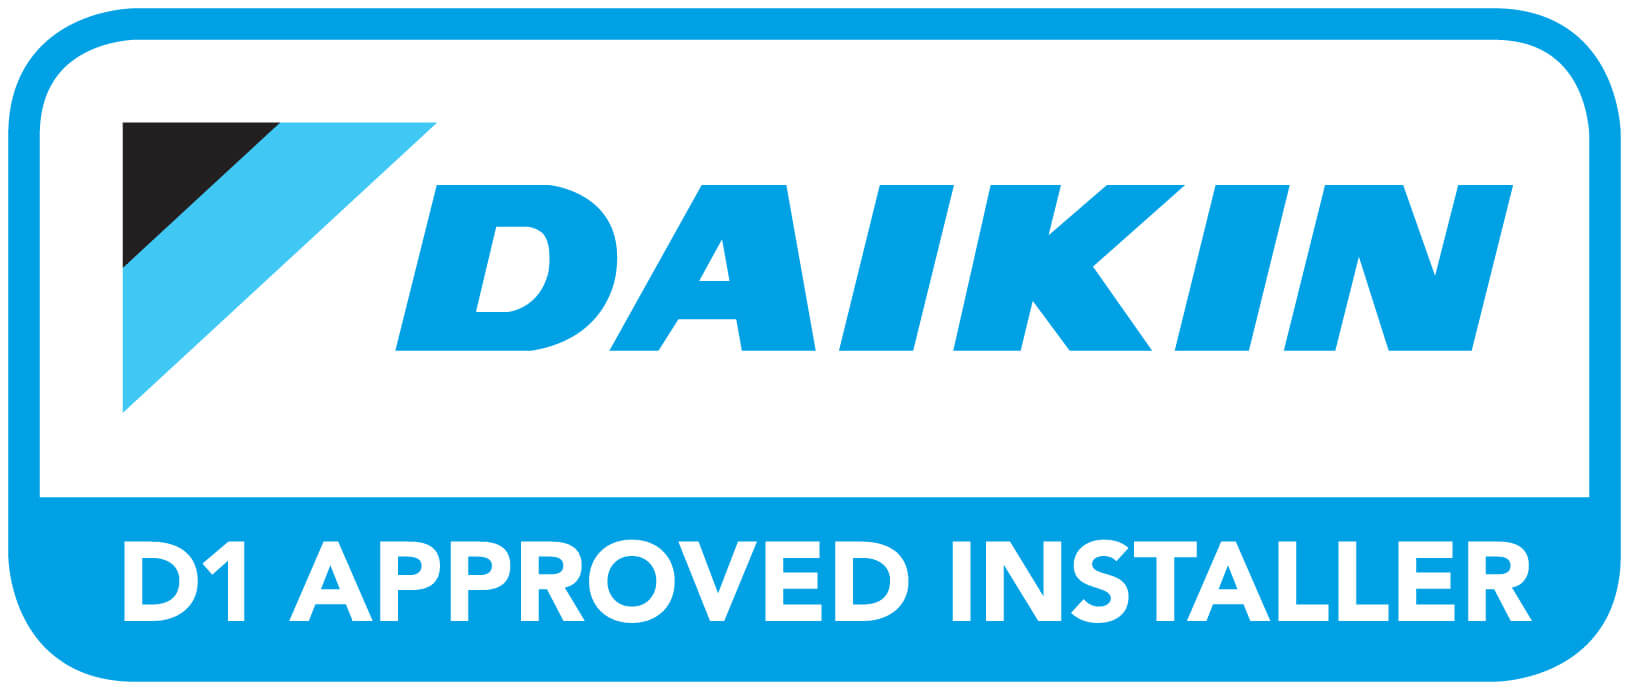 Daikin Air Conditioning Approved Installer